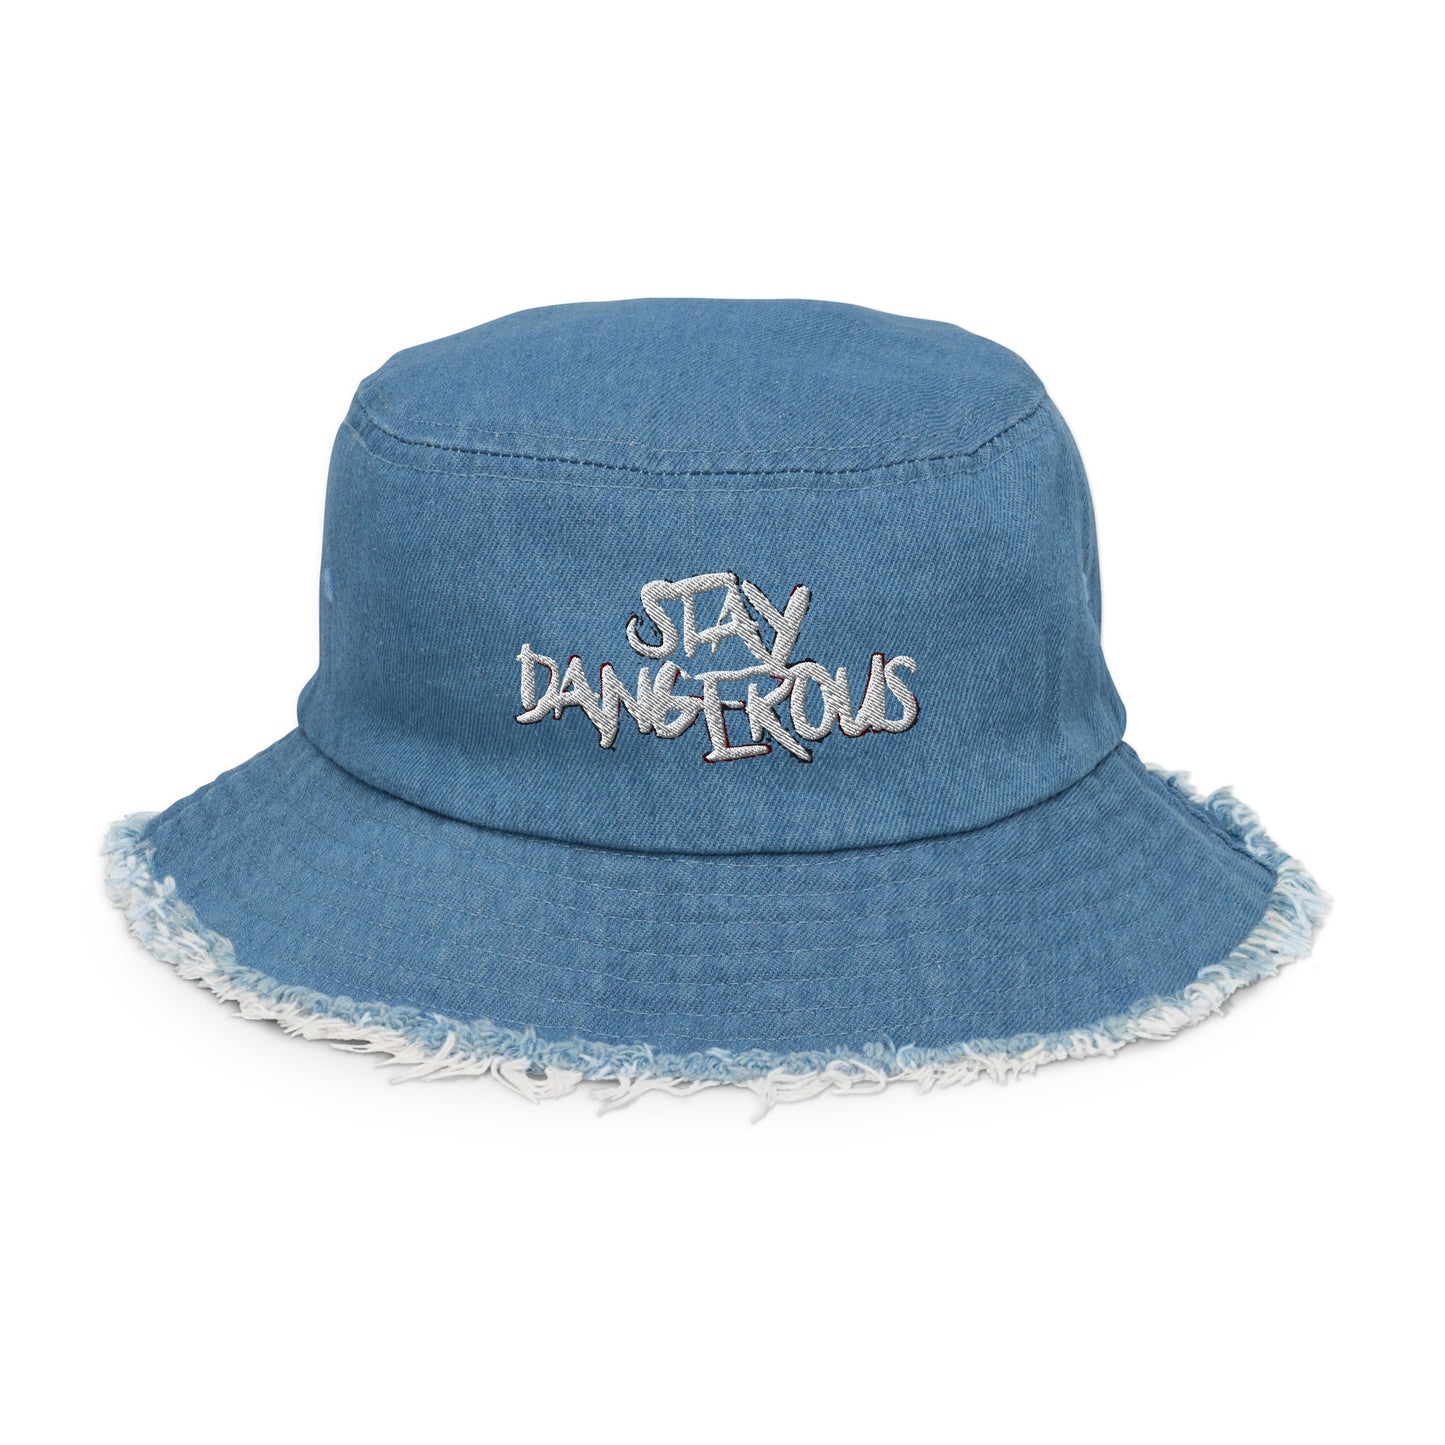 Stay Dangerous Distressed Denim Bucket Hat